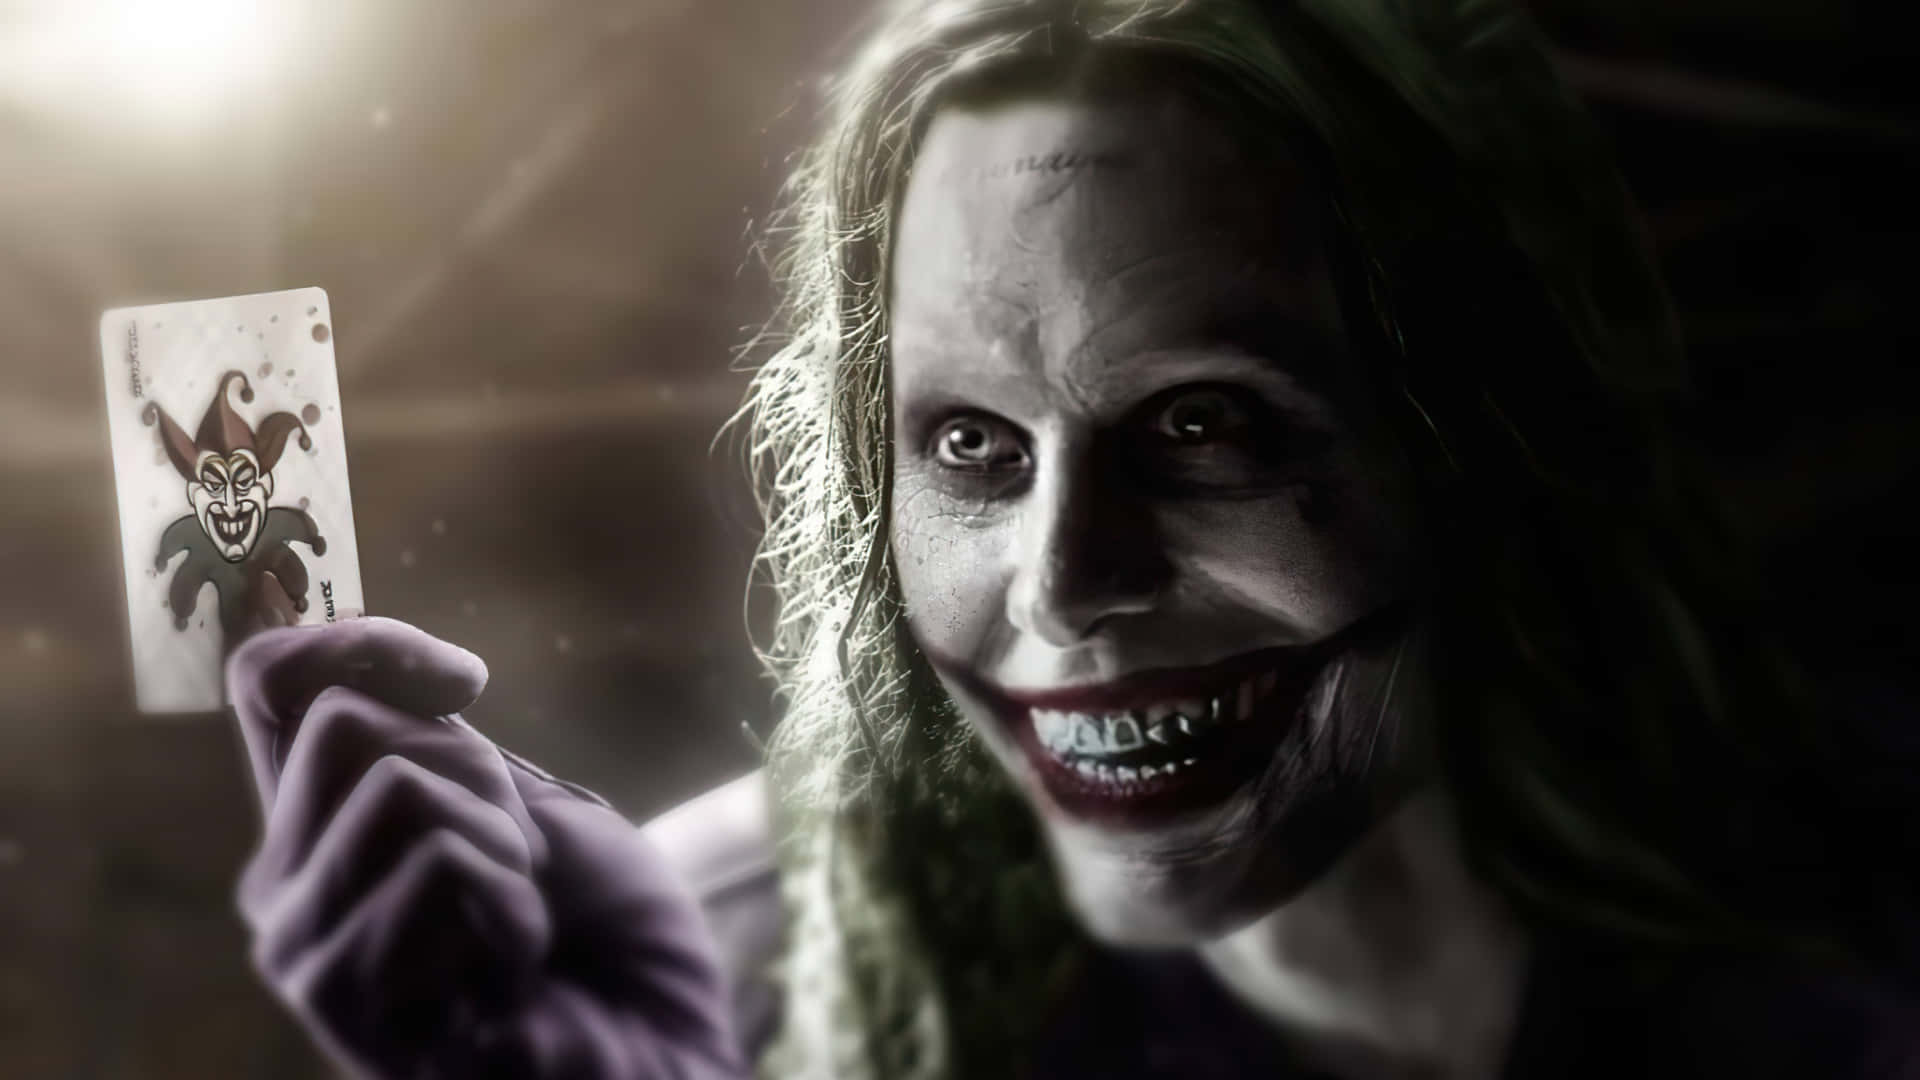 Joker Joker Joker Joker Joker Joker Joker Joker Joker Joker Joker Joker Joker Joker Joker Joker Wallpaper